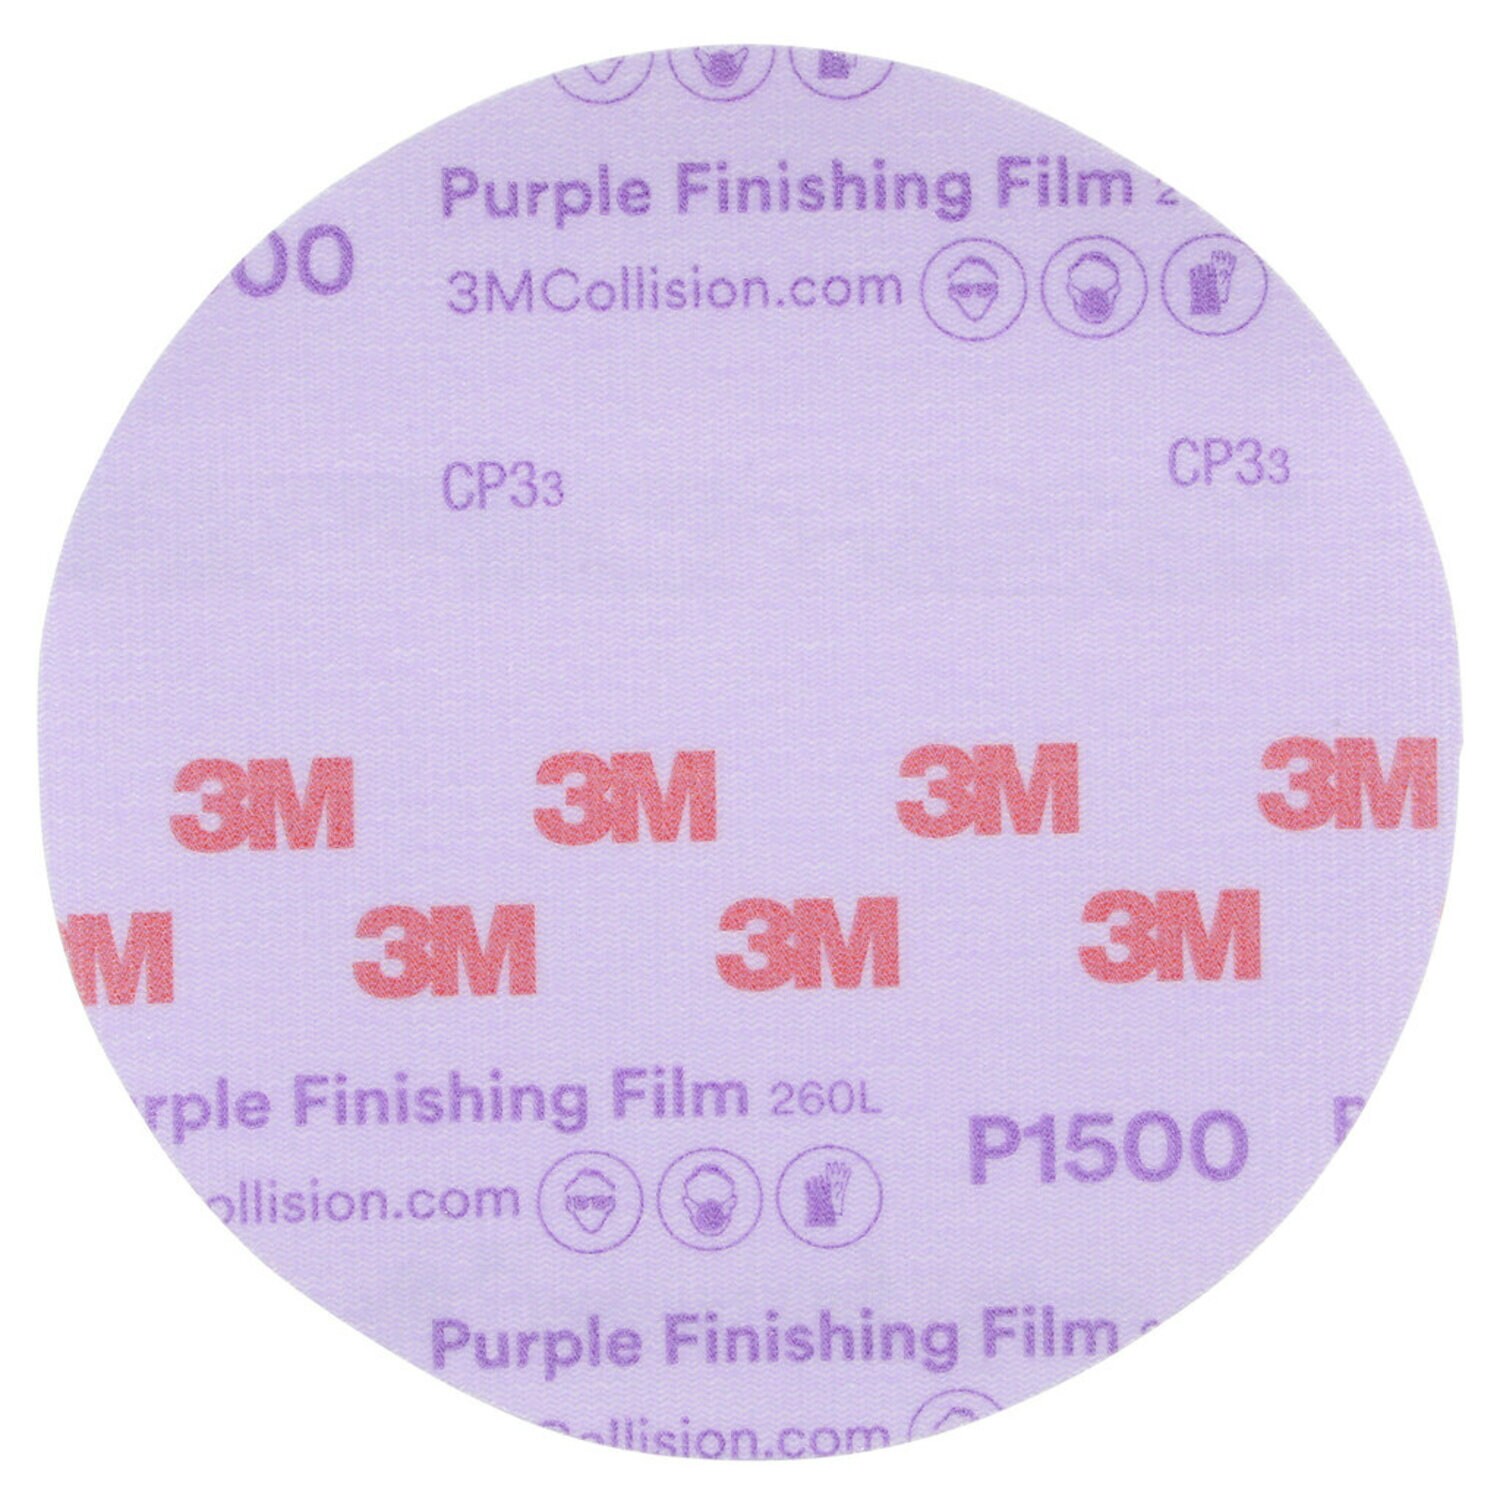 Shiny Quality Stamp / Ink Pad #00 - 3/4 x 2-1/2